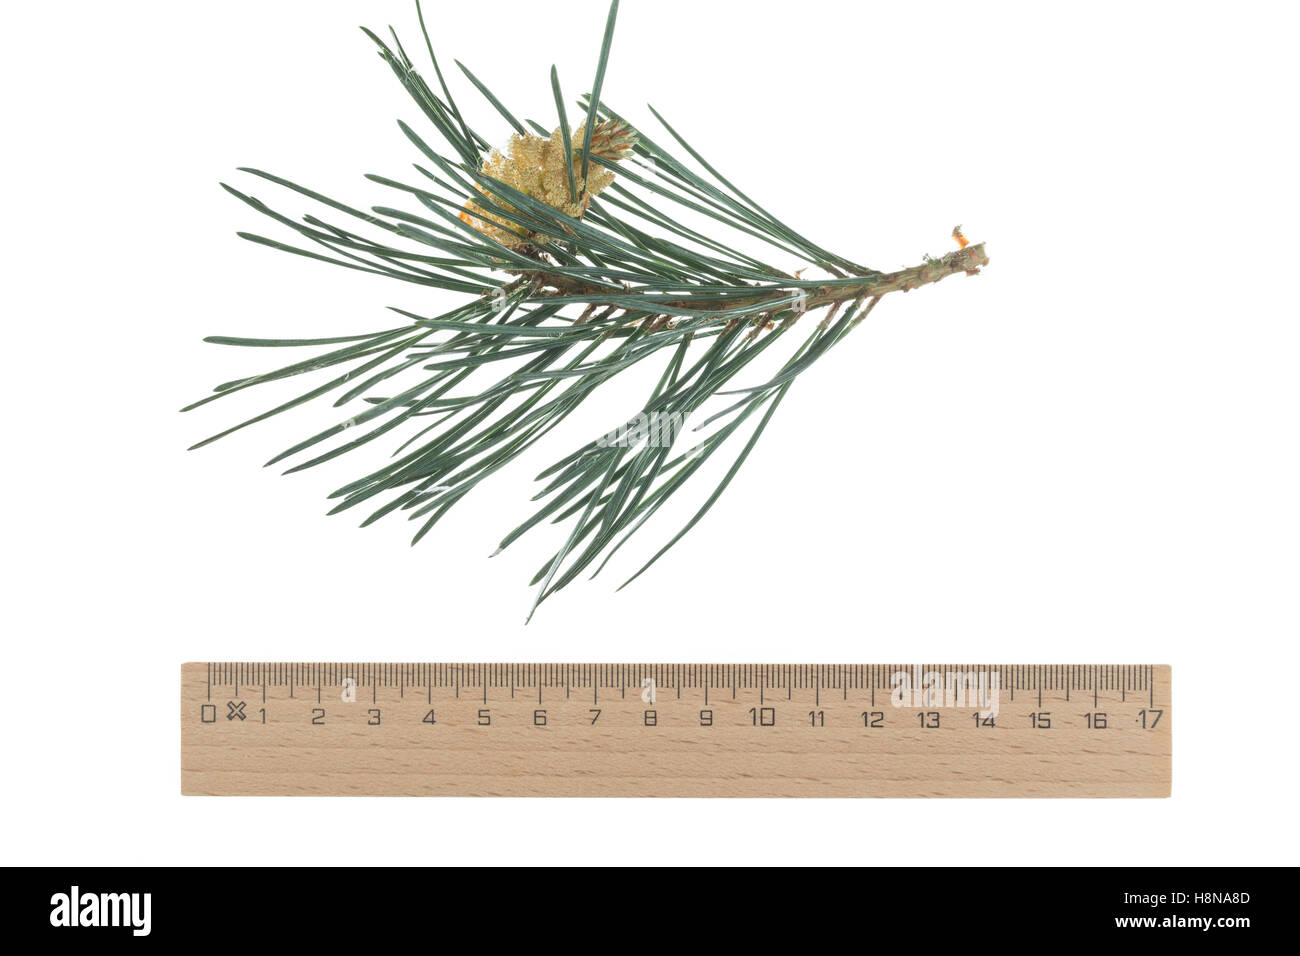 Wald-Kiefer, Waldkiefer, Gemeine Kiefer, Kiefern, Föhre, Pinus sylvestris, Scots Pine, Le Pin sylvestre Stock Photo